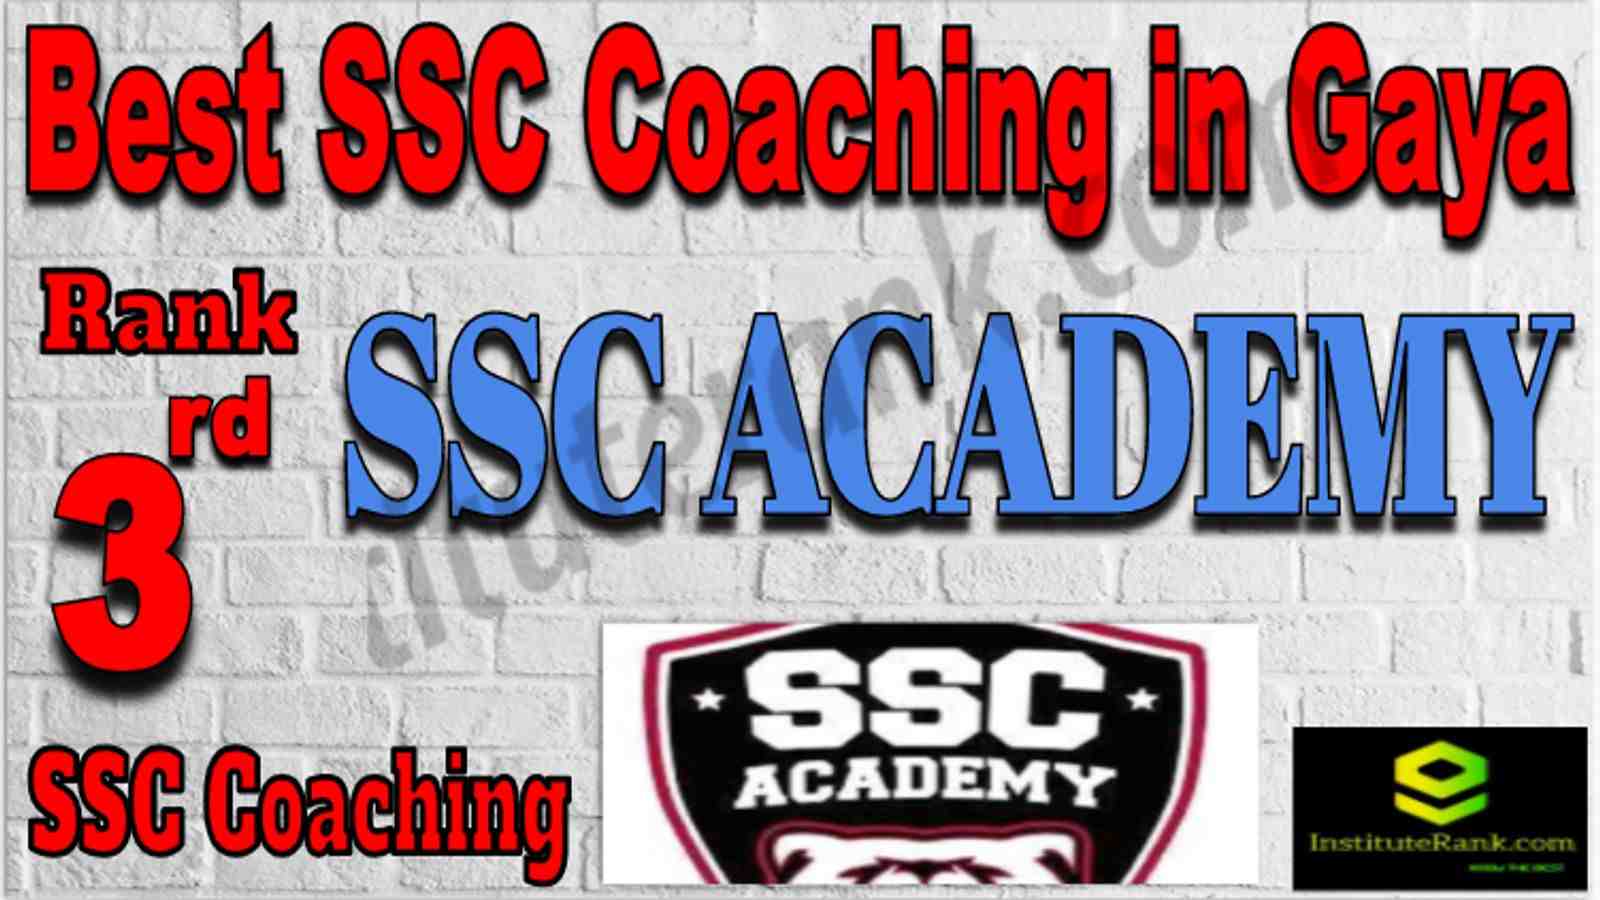 Rank 3 Best SSC Coaching in Gaya